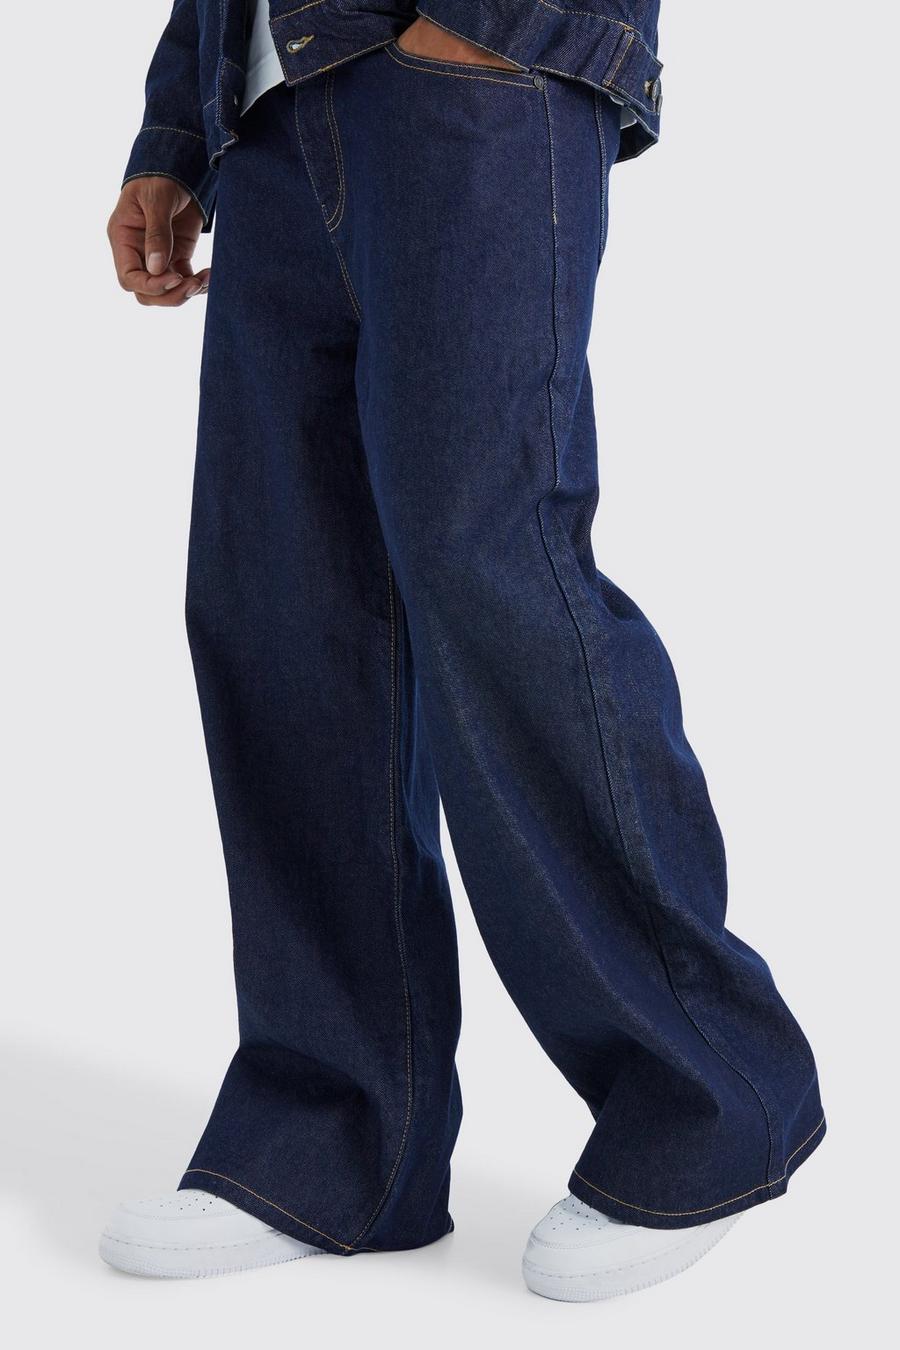 Indigo Extreme Baggy Rigid Jeans